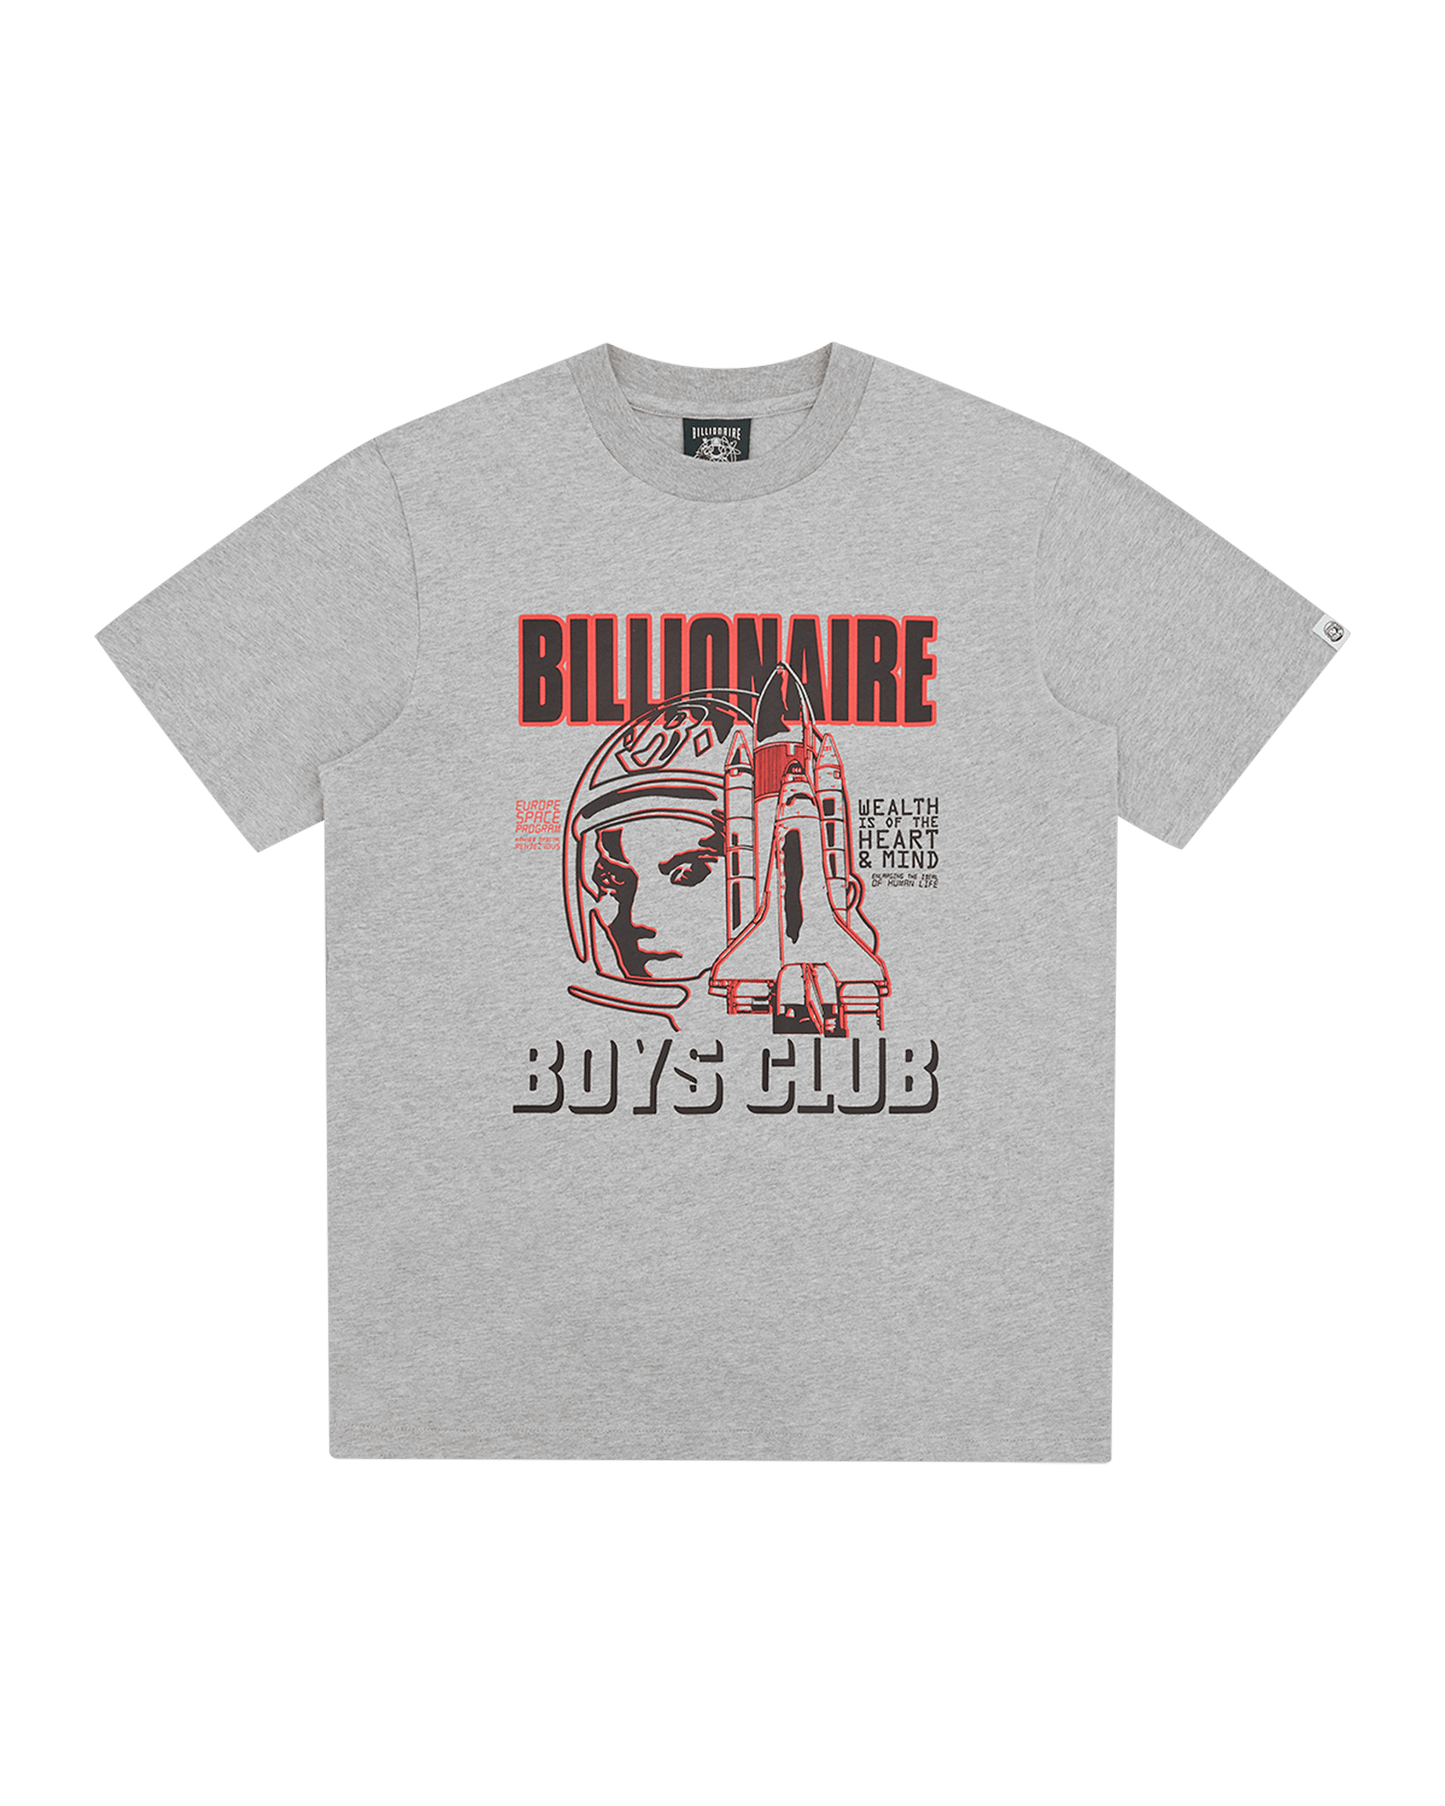 Space Program T-Shirt - Billionaire Boys Club Europe